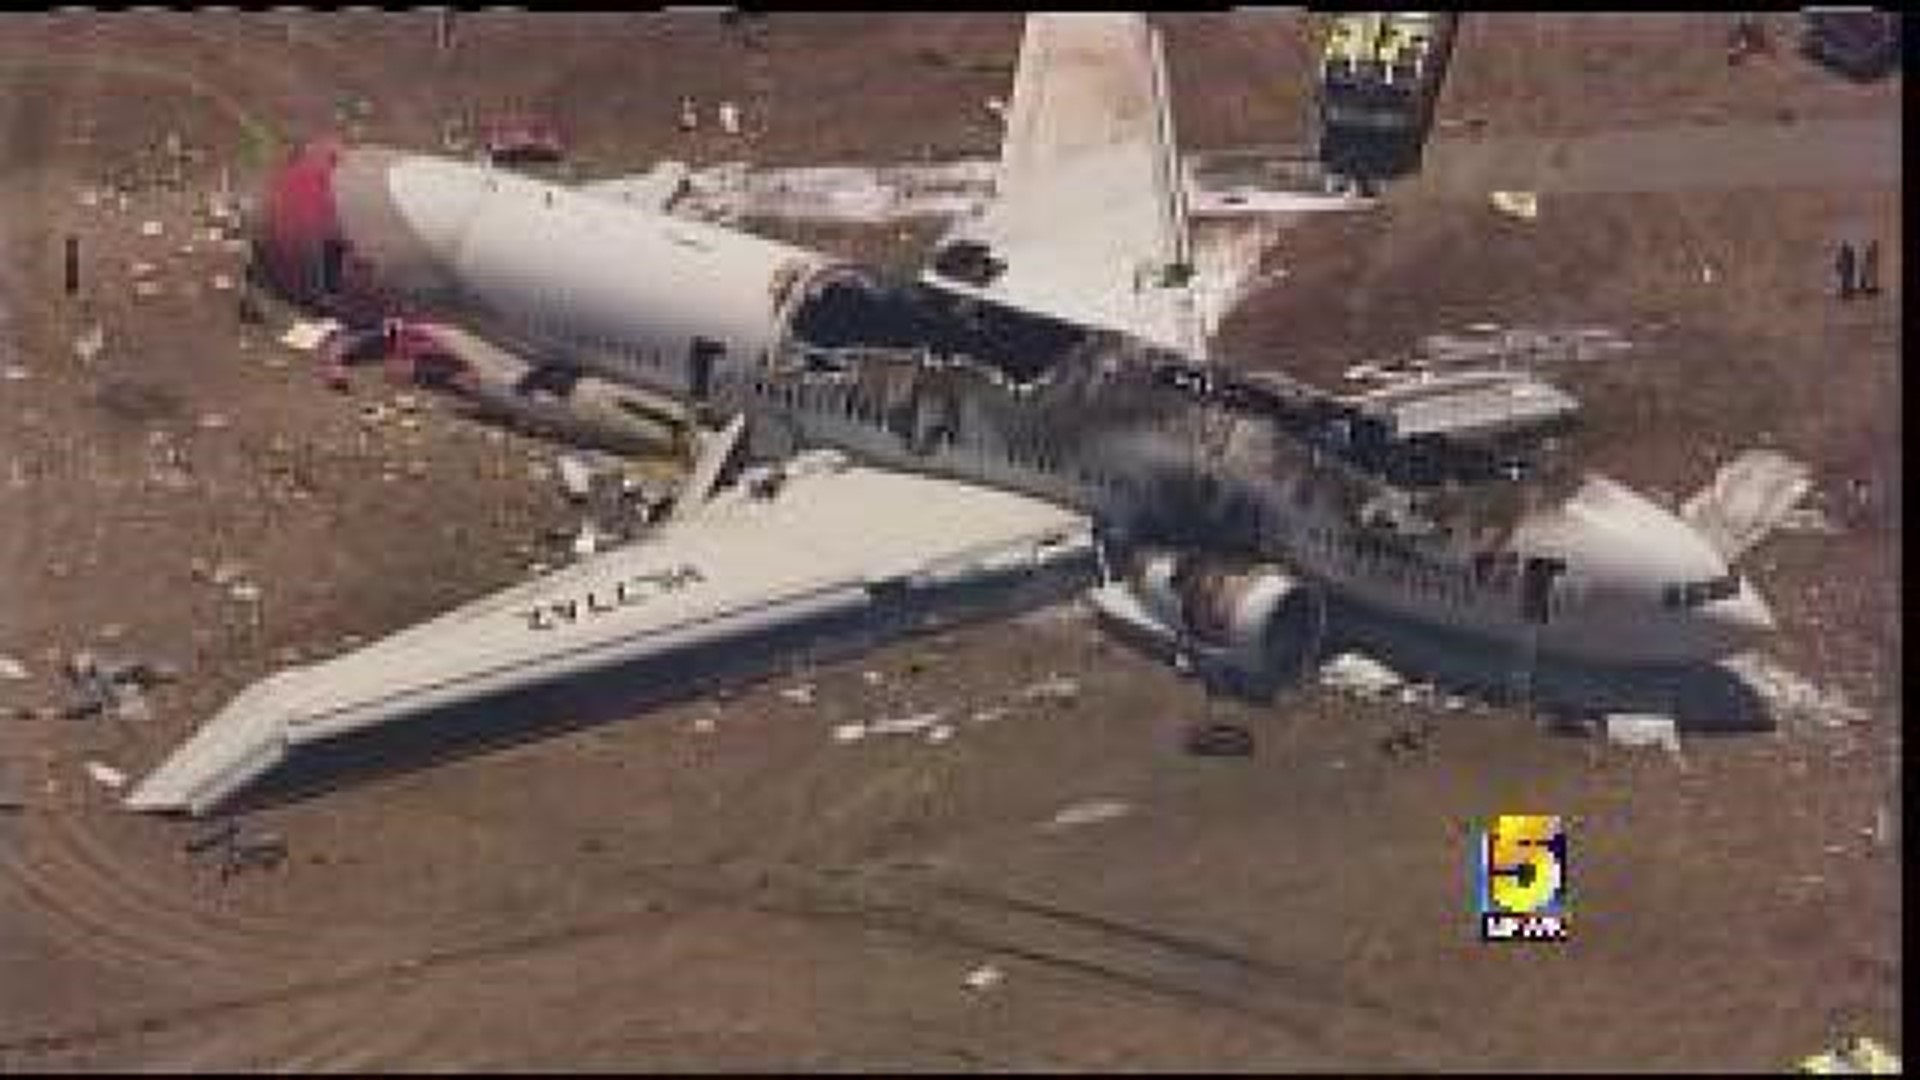 Asiana Flight Crash Has Local Authorities Thinking About Response